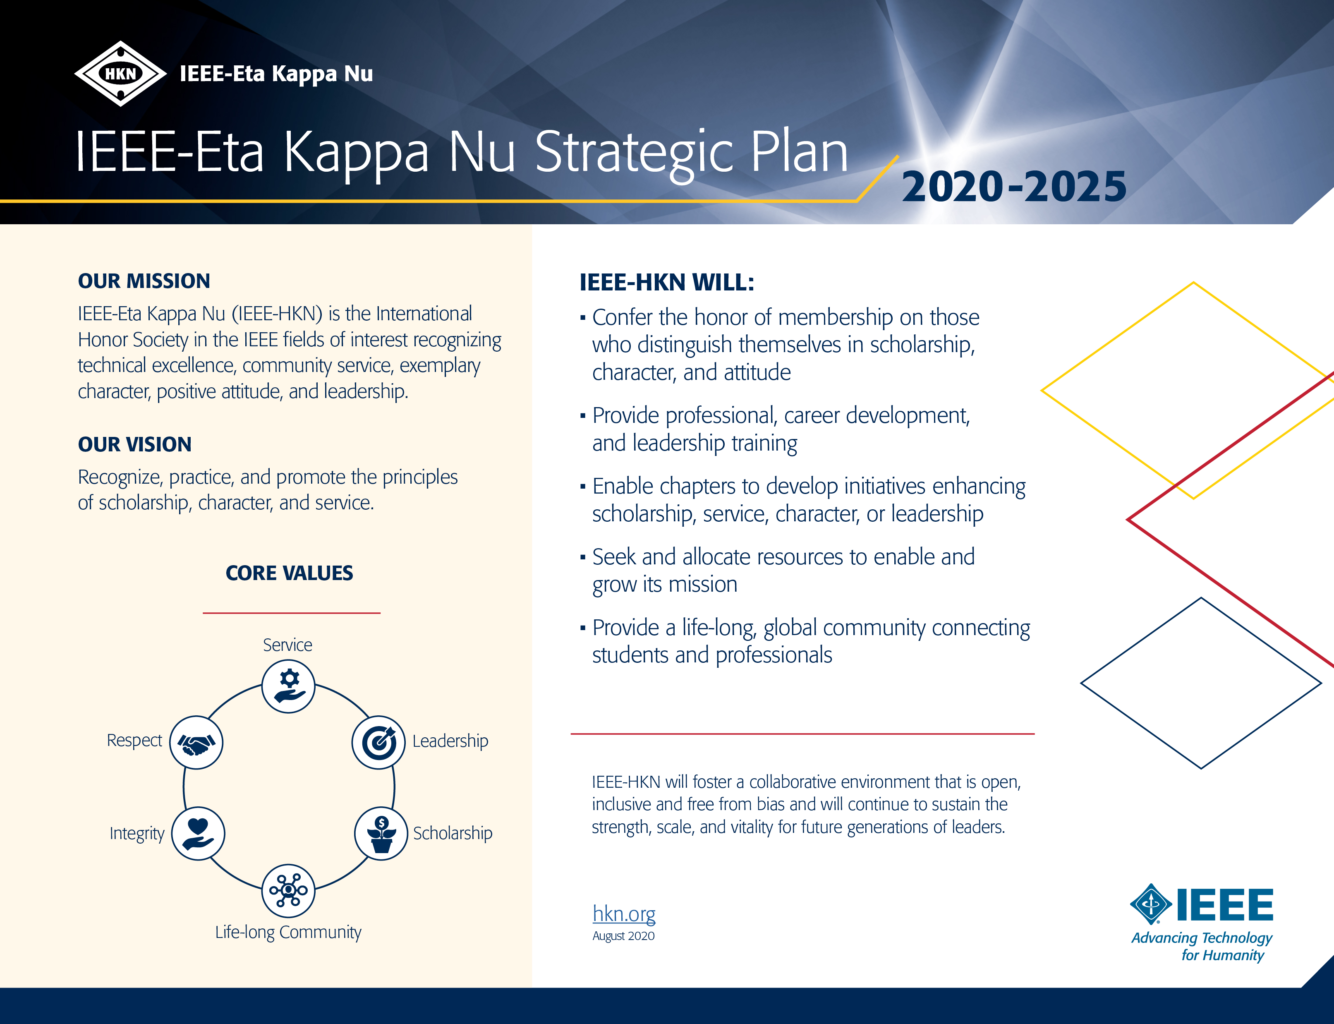 2020-2025 Strategic Plan